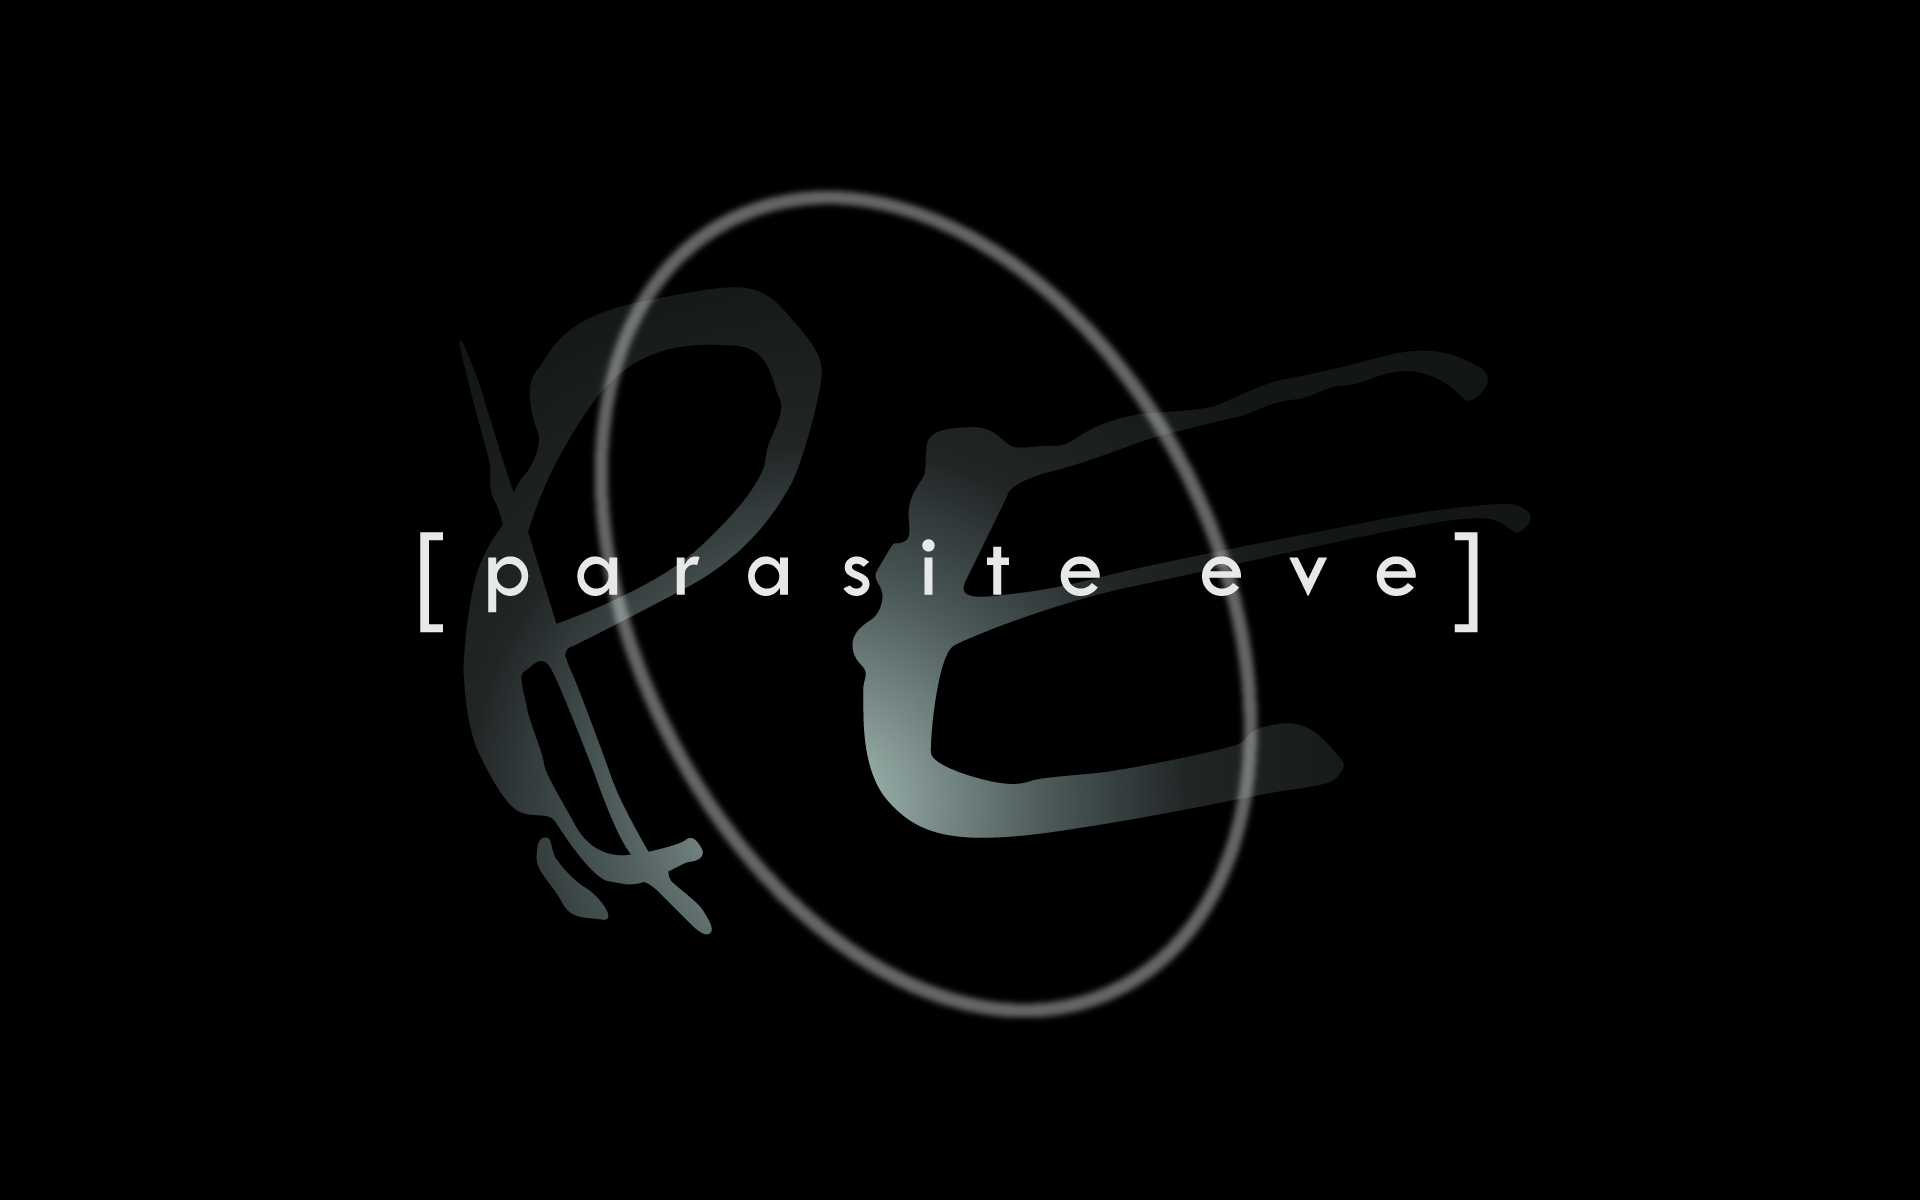 Parasite Eve Psx Desktop Wallpaper